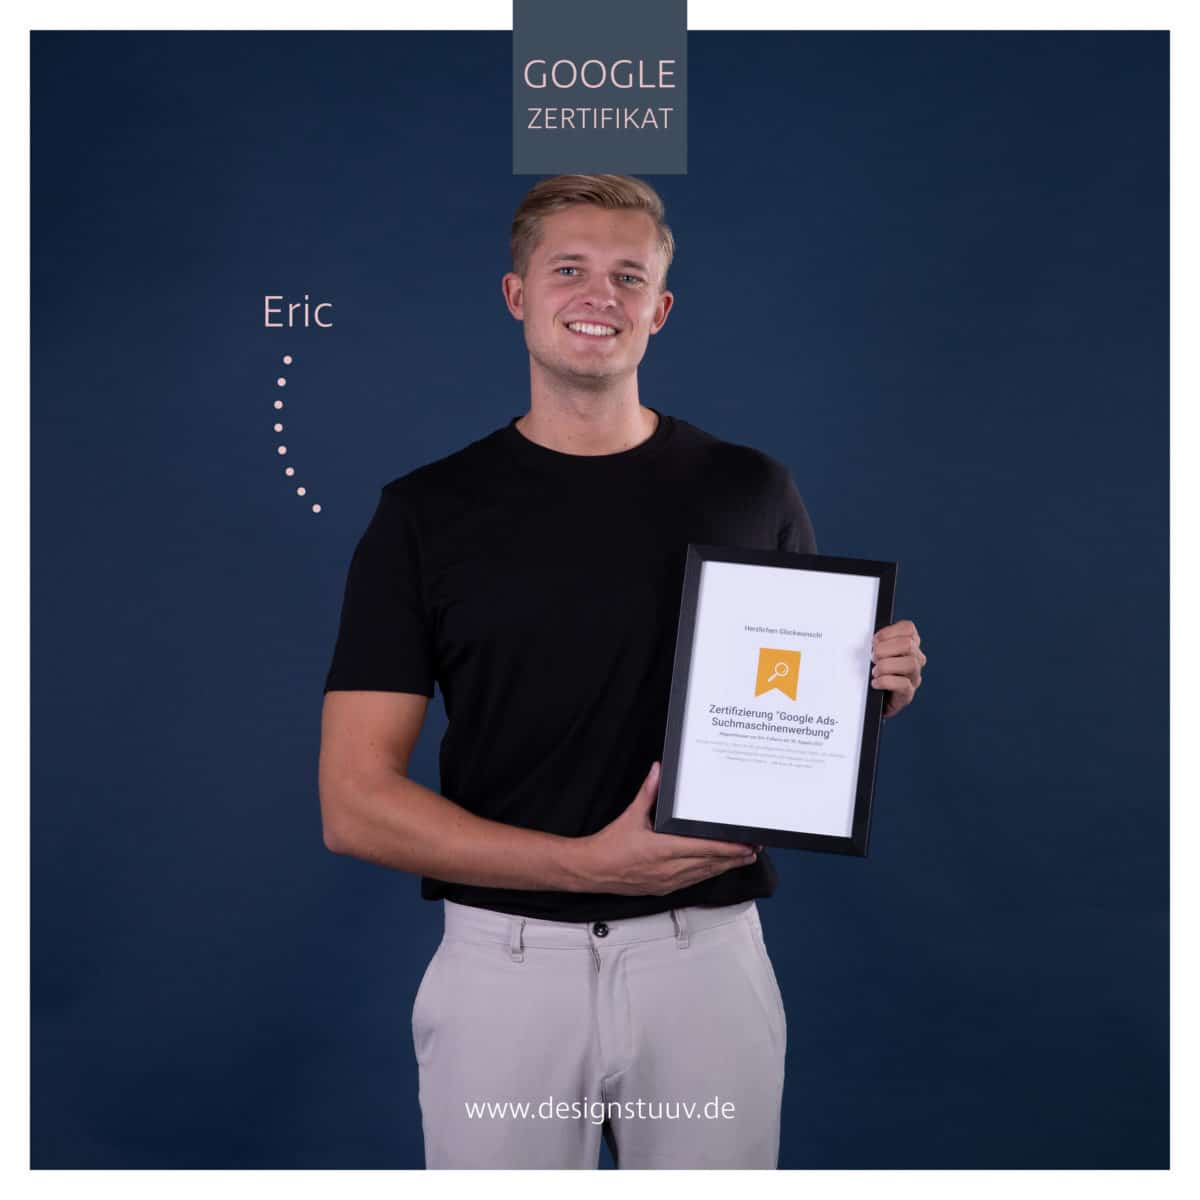 Google-Zertifikate-jannes-jonas-eric4